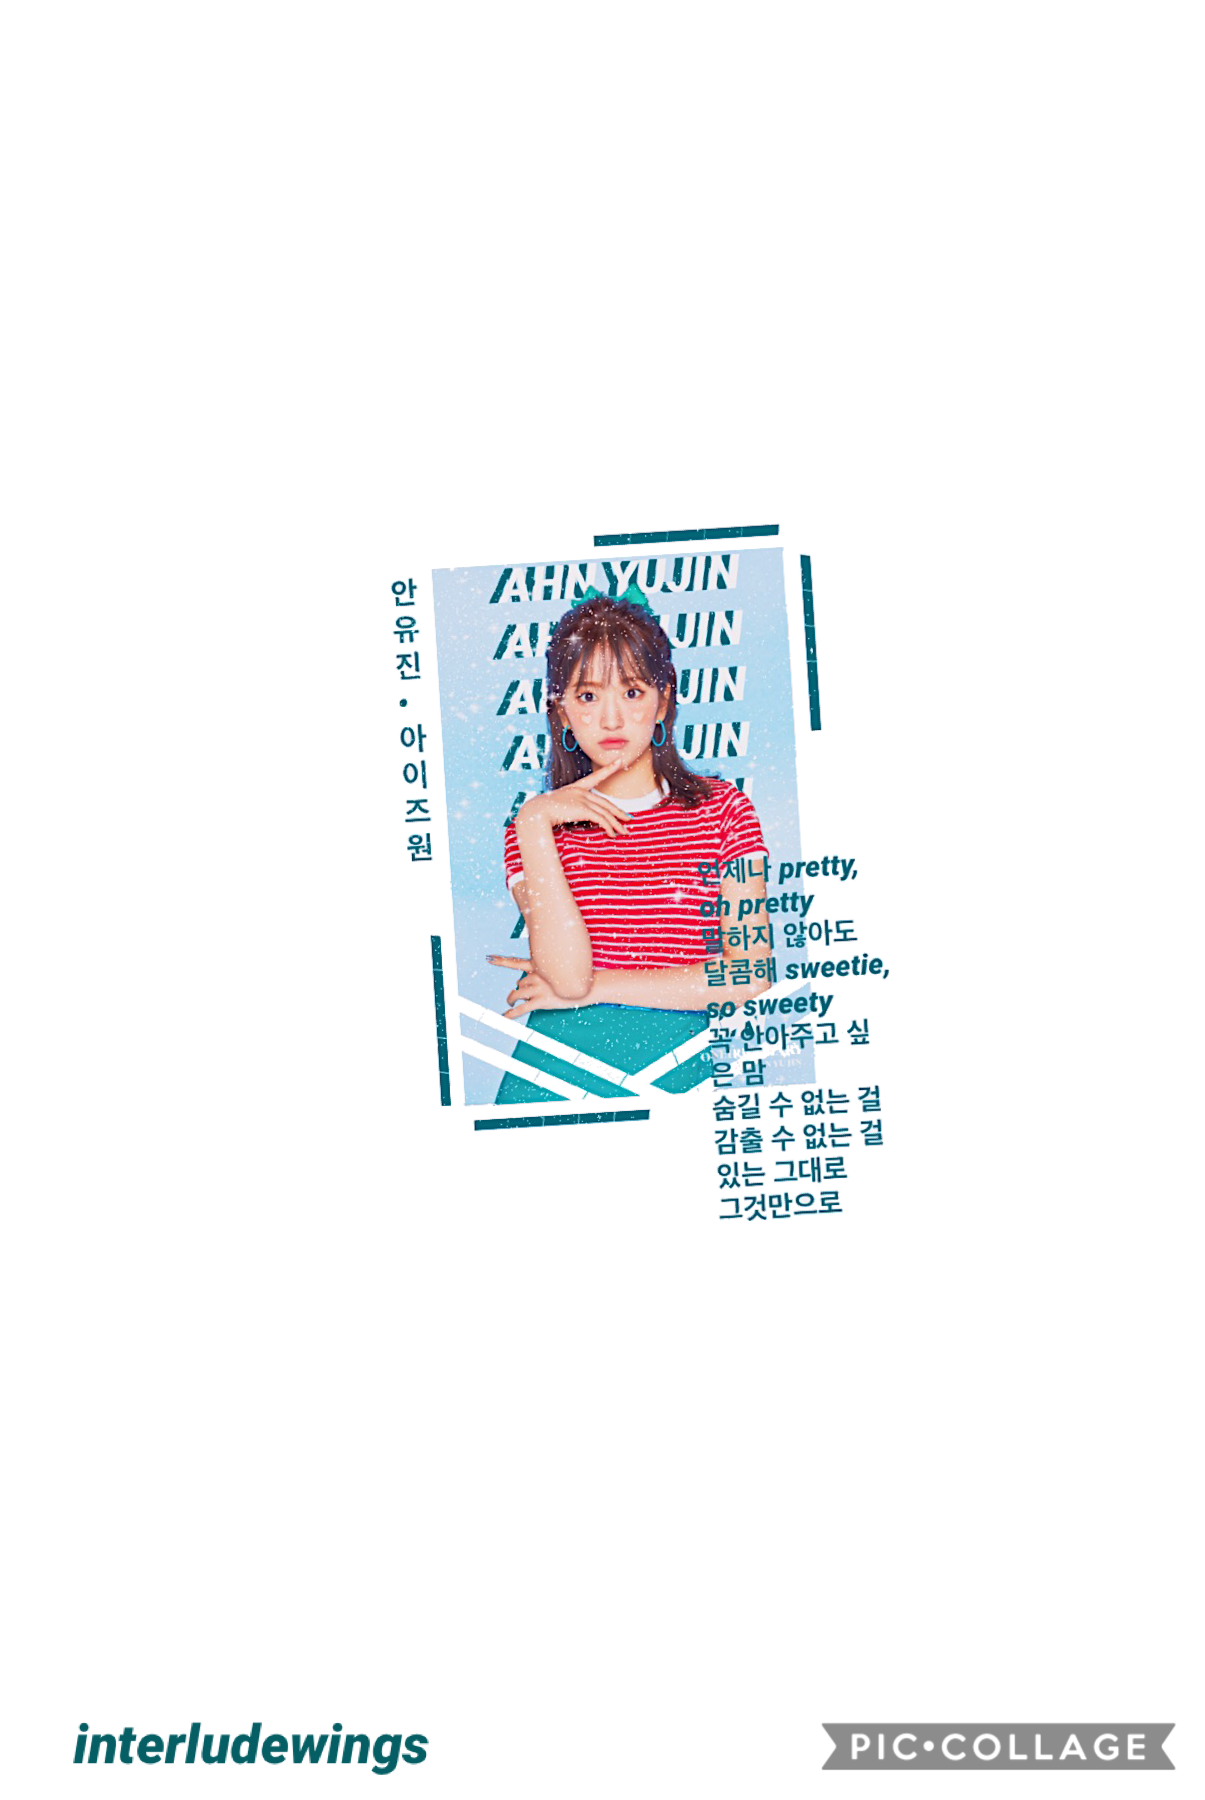 ❤️ open ❤️
yujin~izone 
idk how i feel abt this edit but izone’s mini album slaps! my favorite tracks are pretty and merry go round 🥰